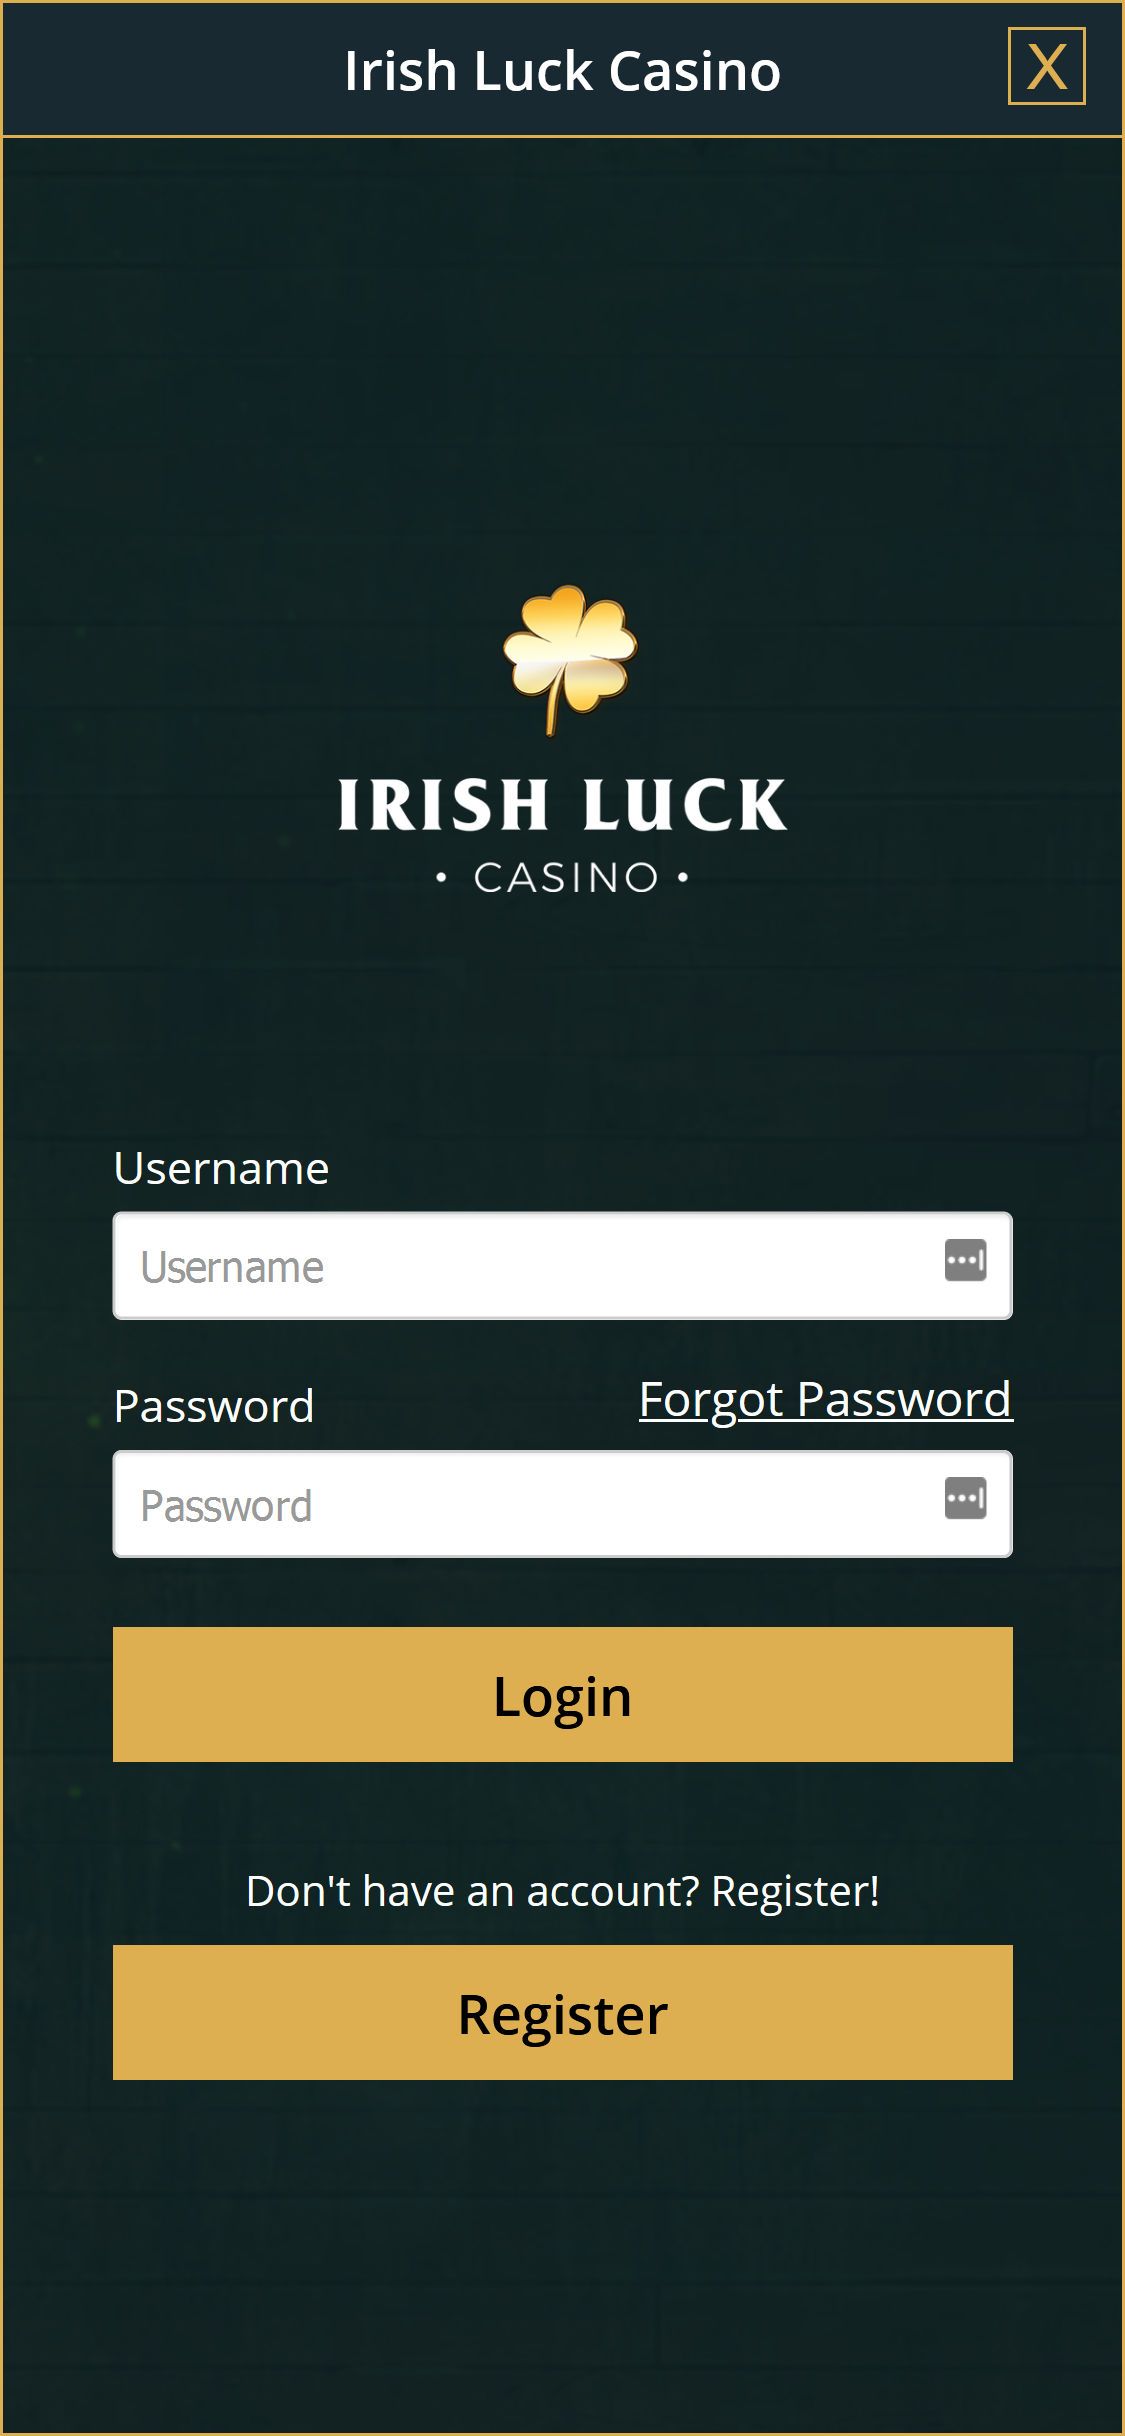 IrishLuck Casino Mobile Login Review